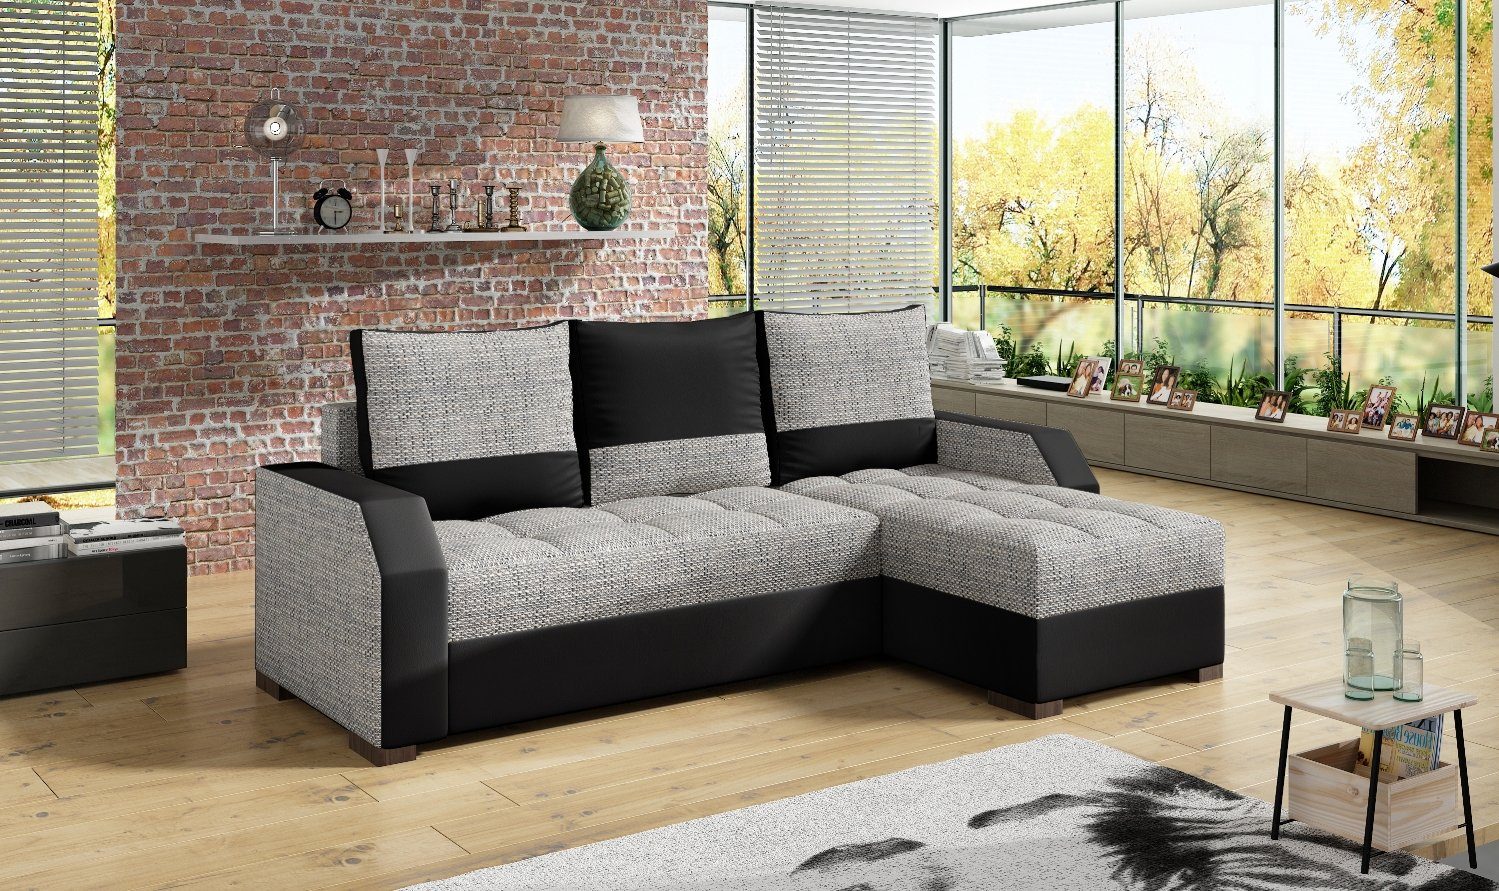 JVmoebel Ecksofa, Design Polster Hellgrau Ecksofa Textil Couch Sofas Leder / Bettfunktion Couchen Schwarz